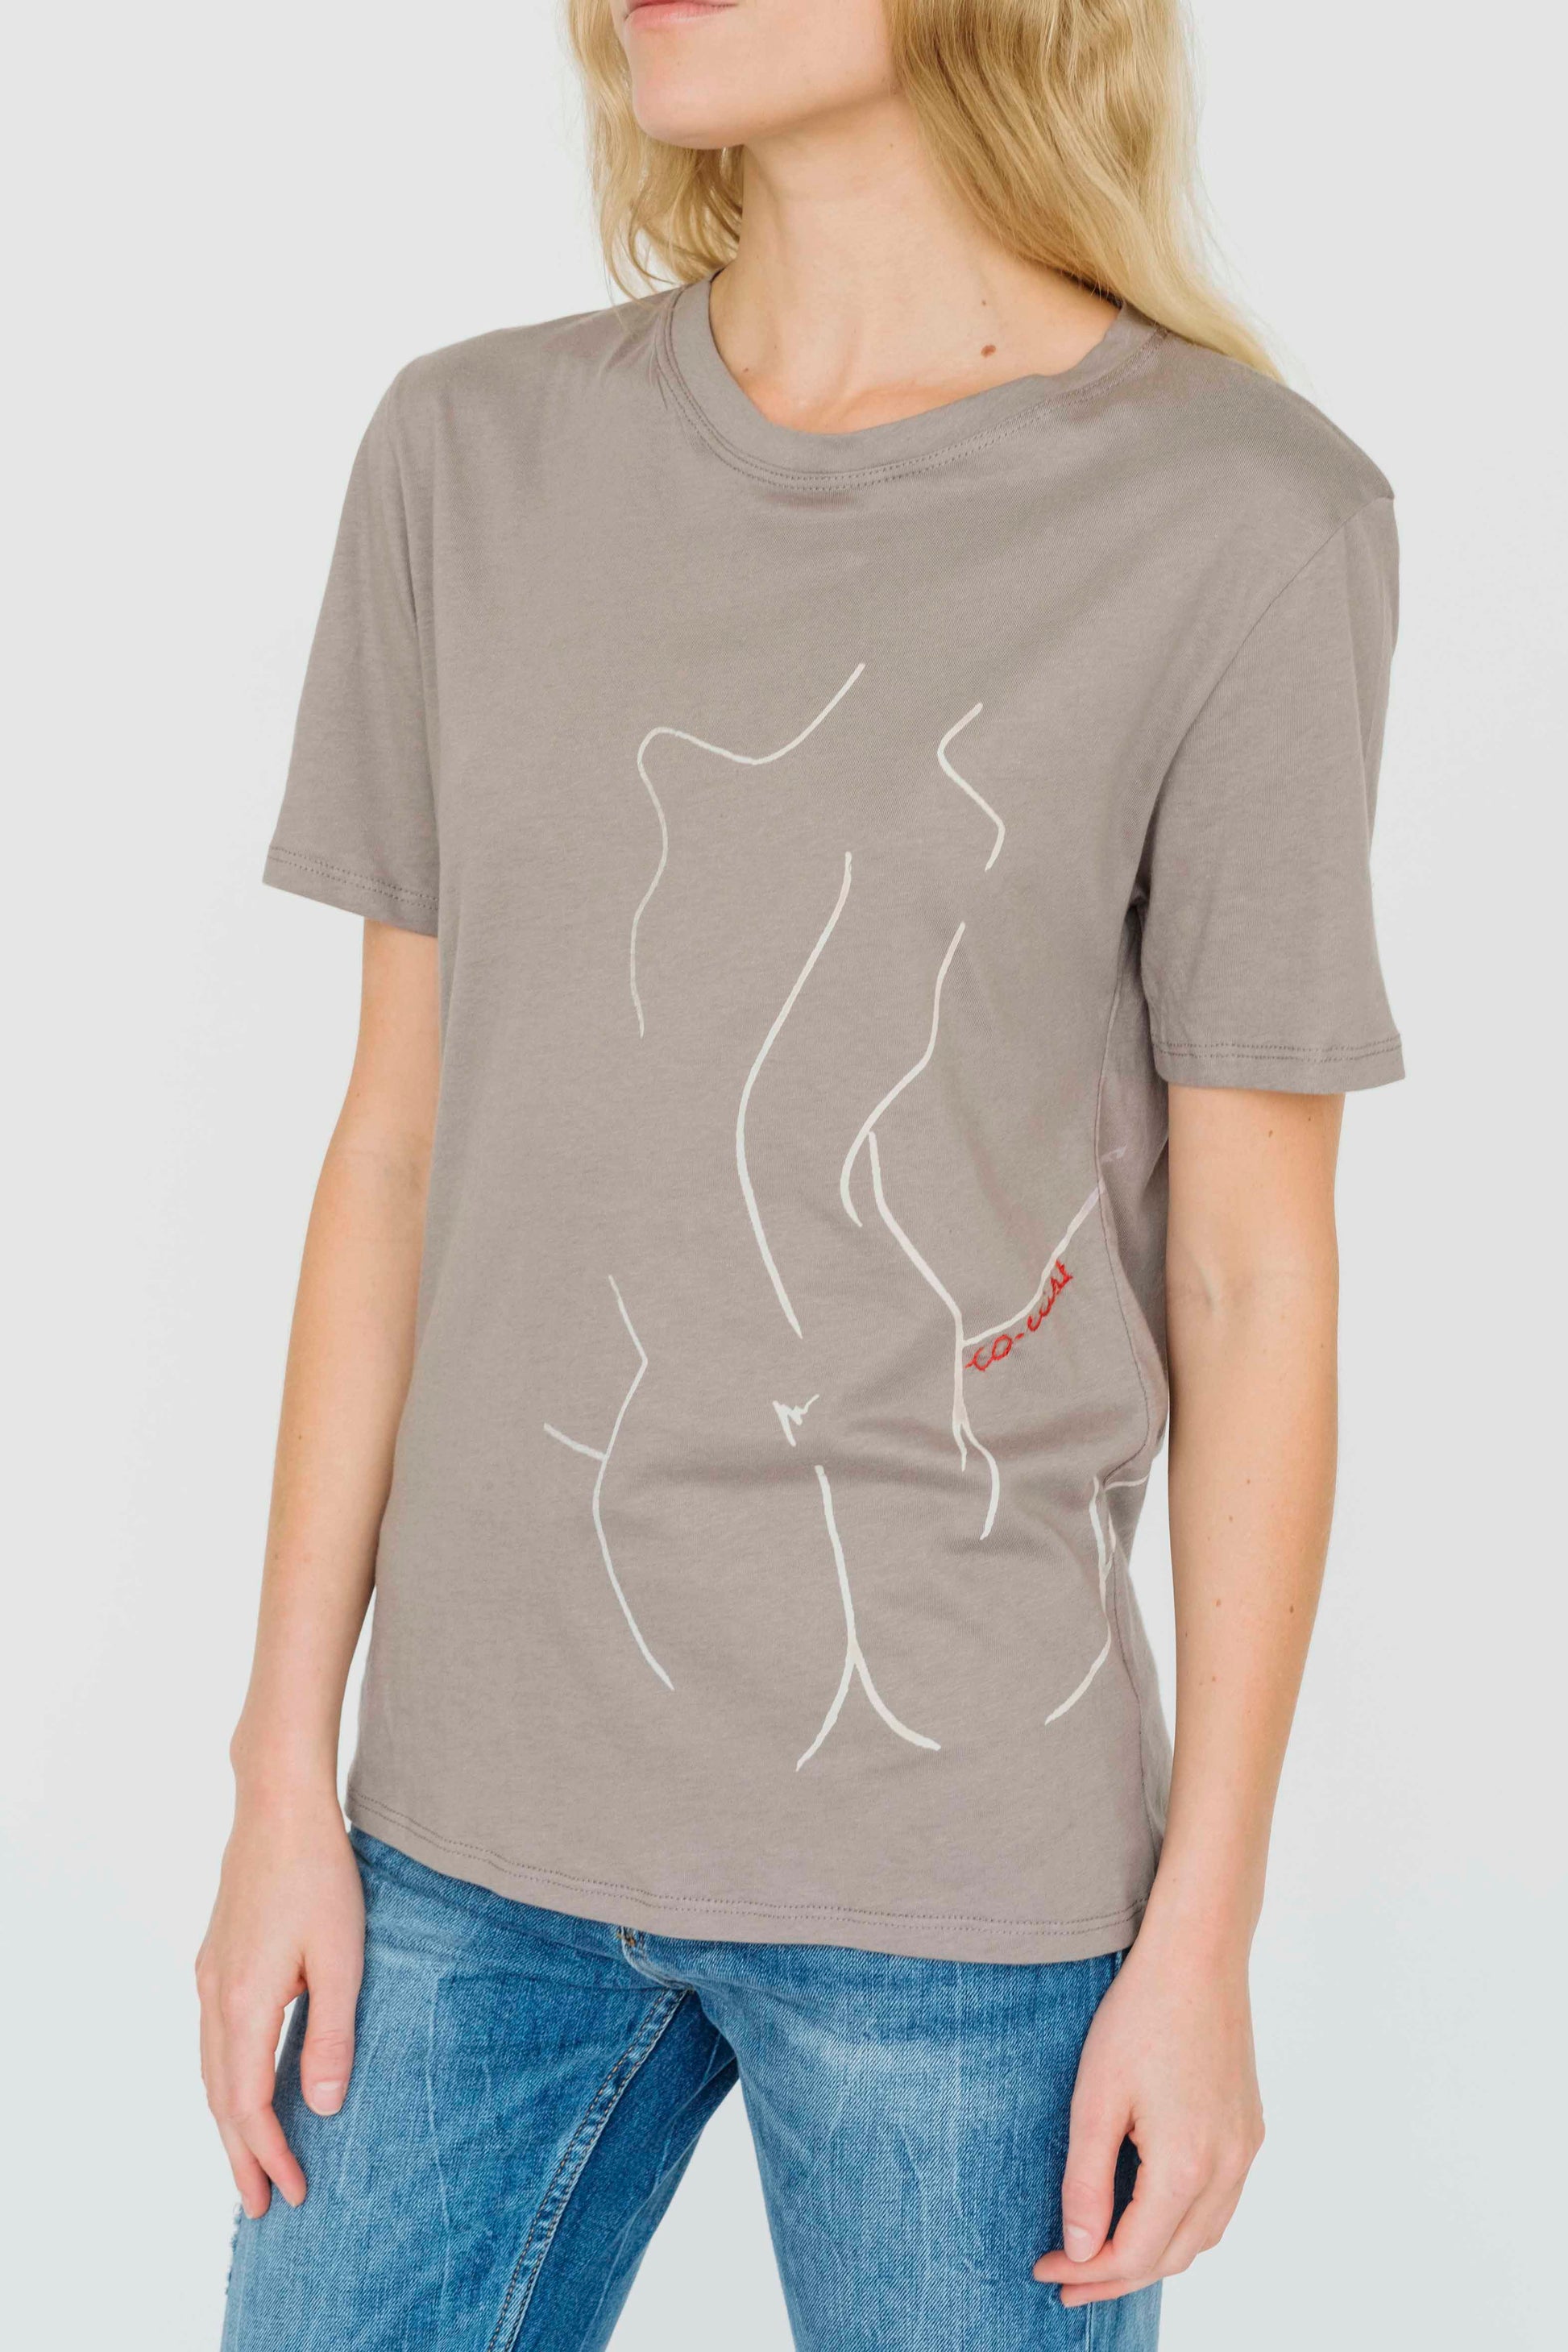 Wellcoda No Bra No Pants Womens T-shirt, Lazy Funny Casual Design Printed  Tee